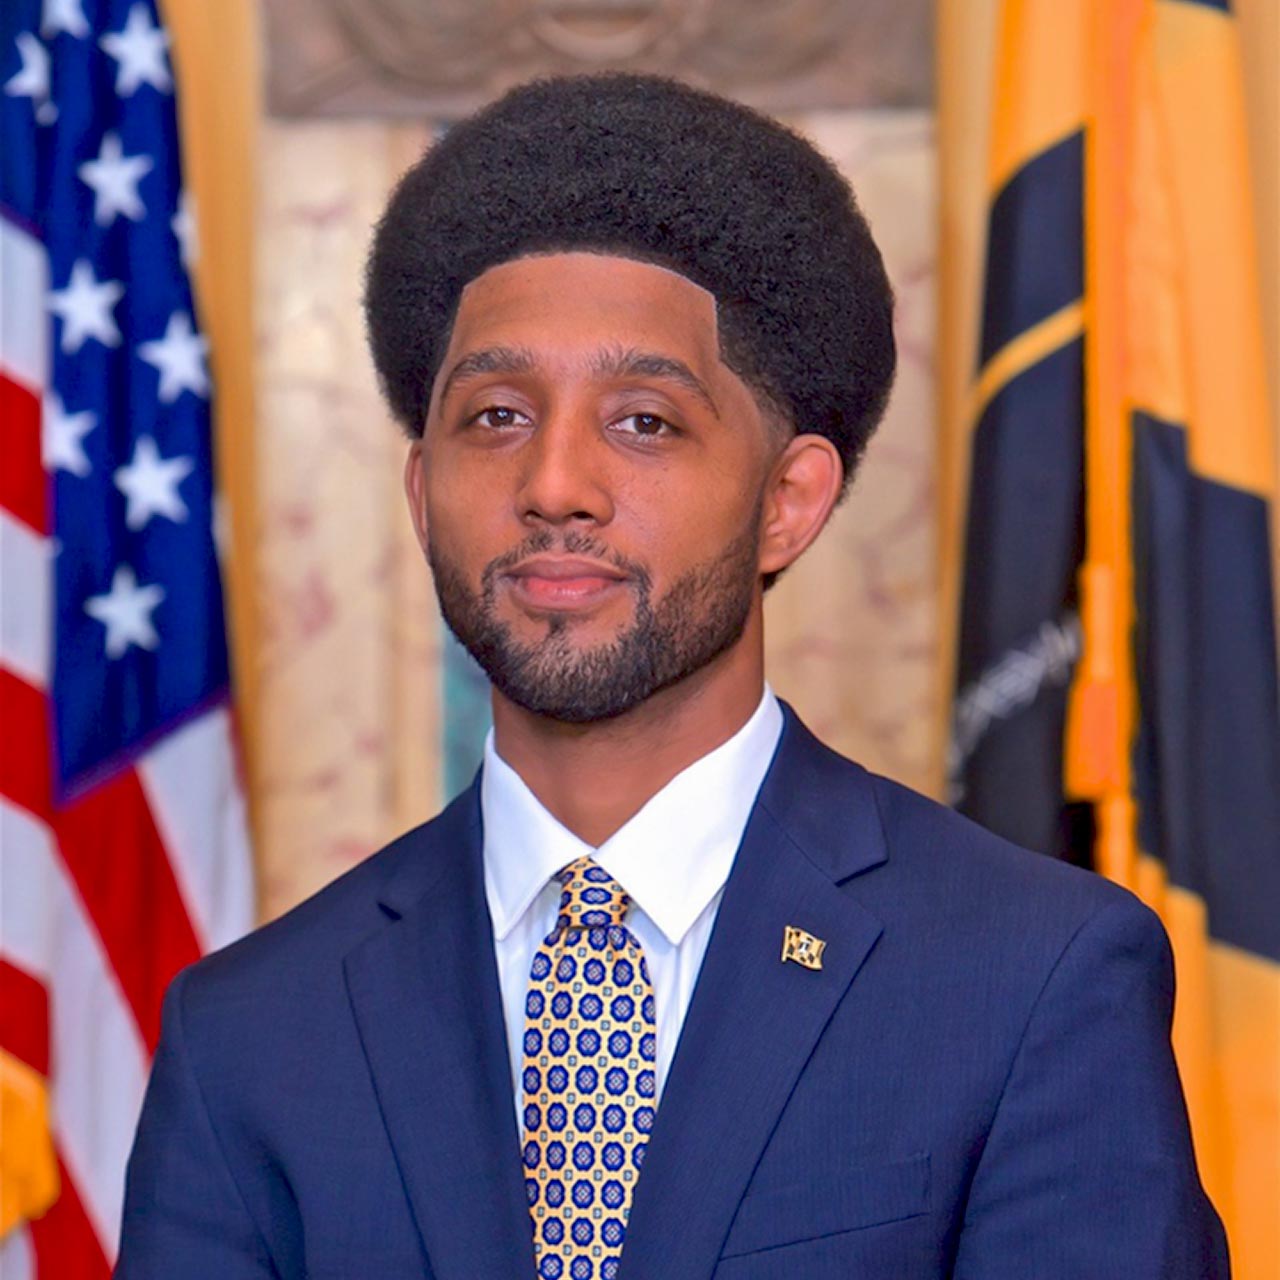 Brandon M. Scott ’06 is the 52nd mayor of Baltimore, Maryland